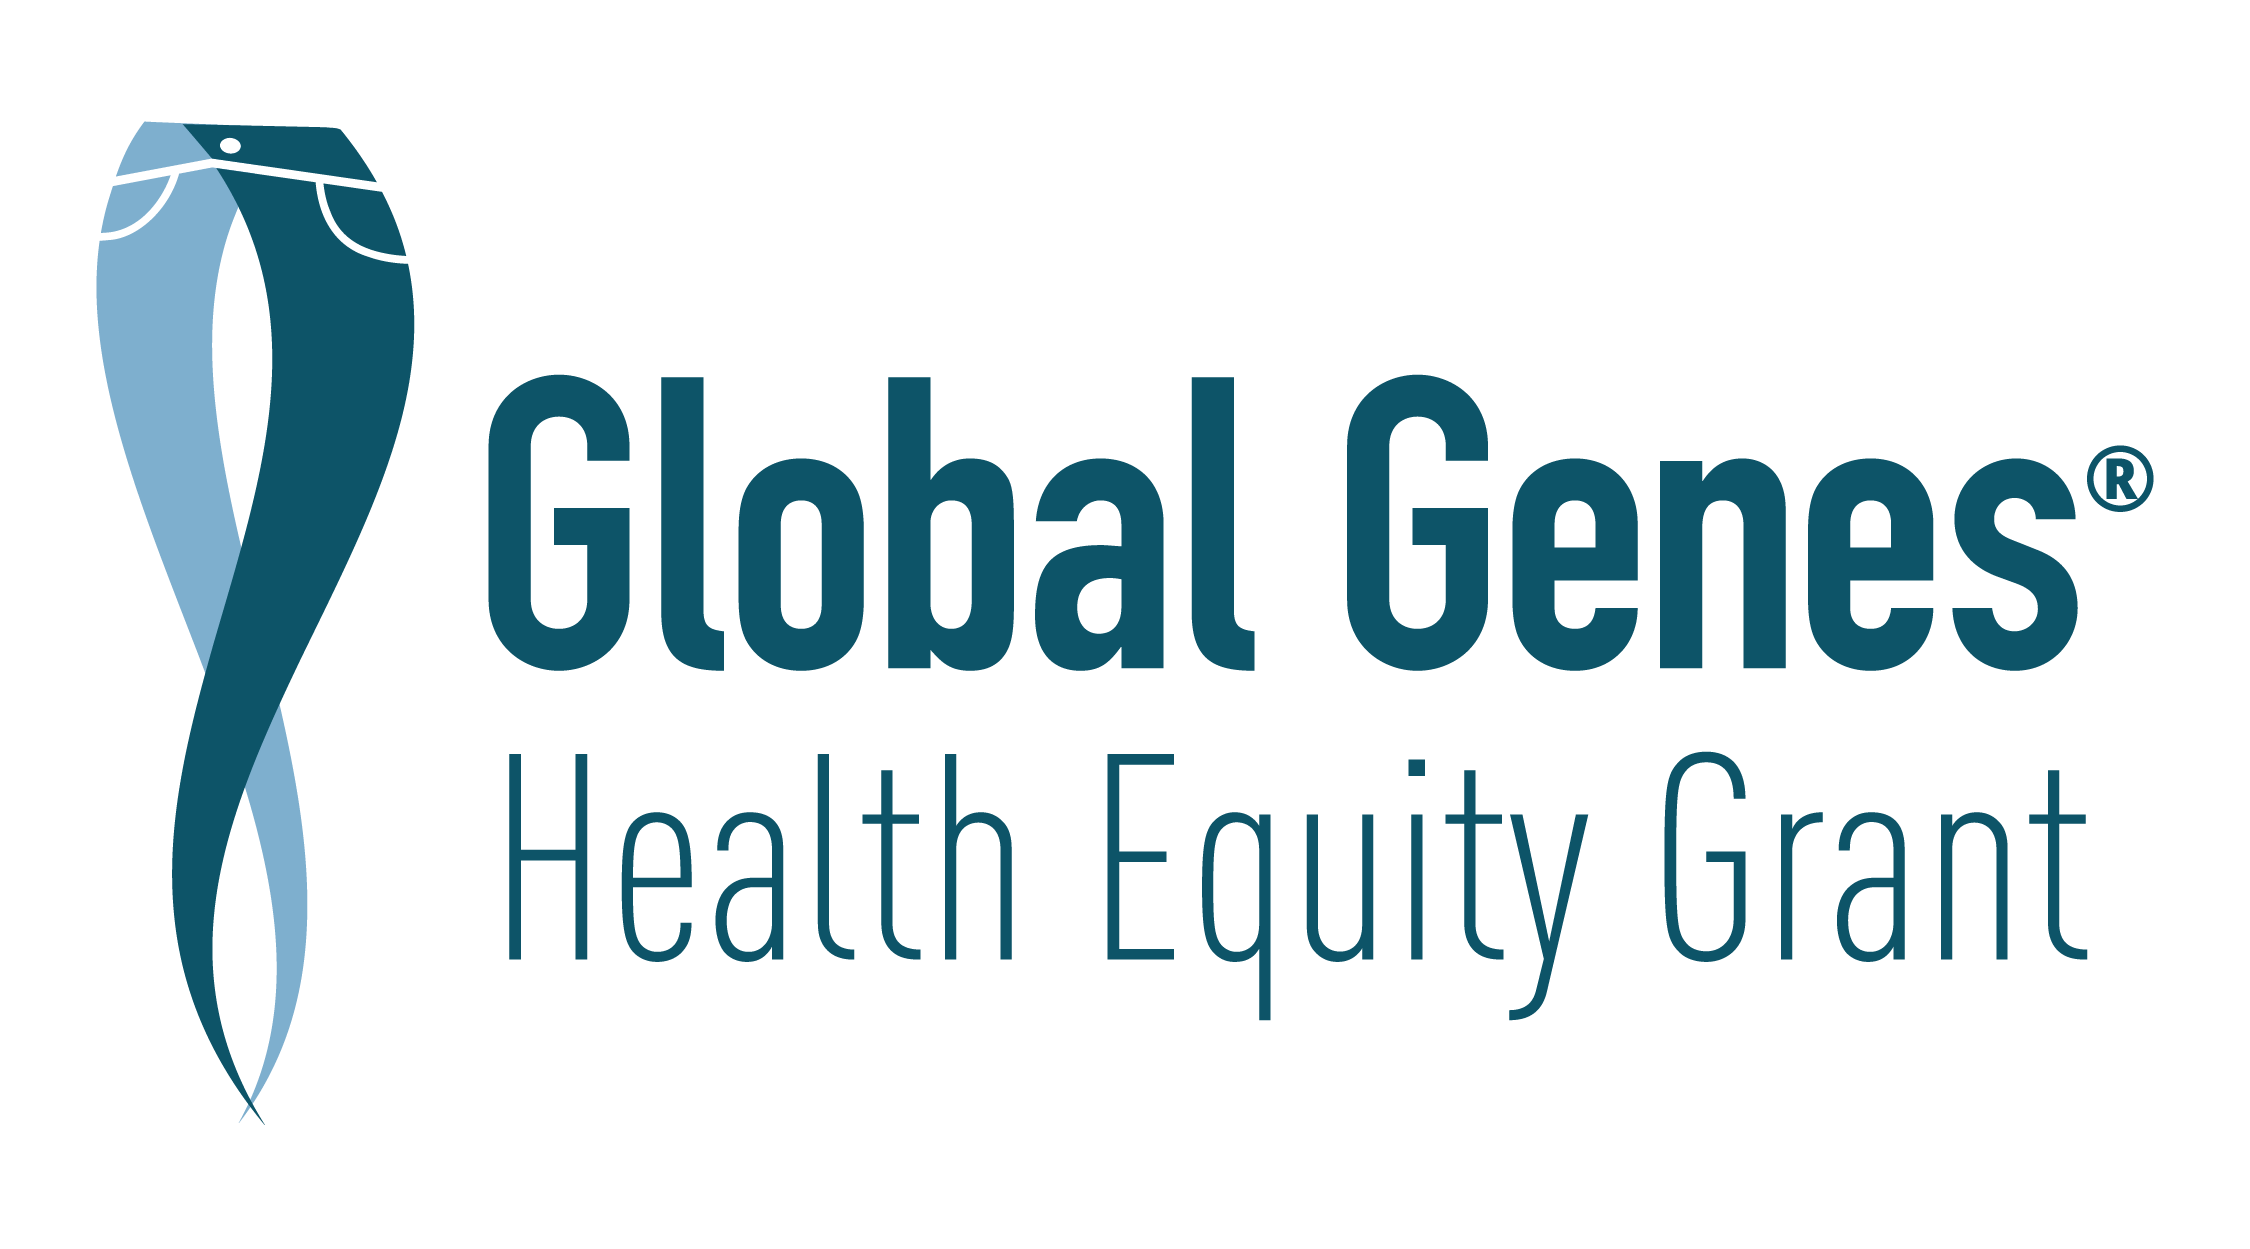 Health equity grants